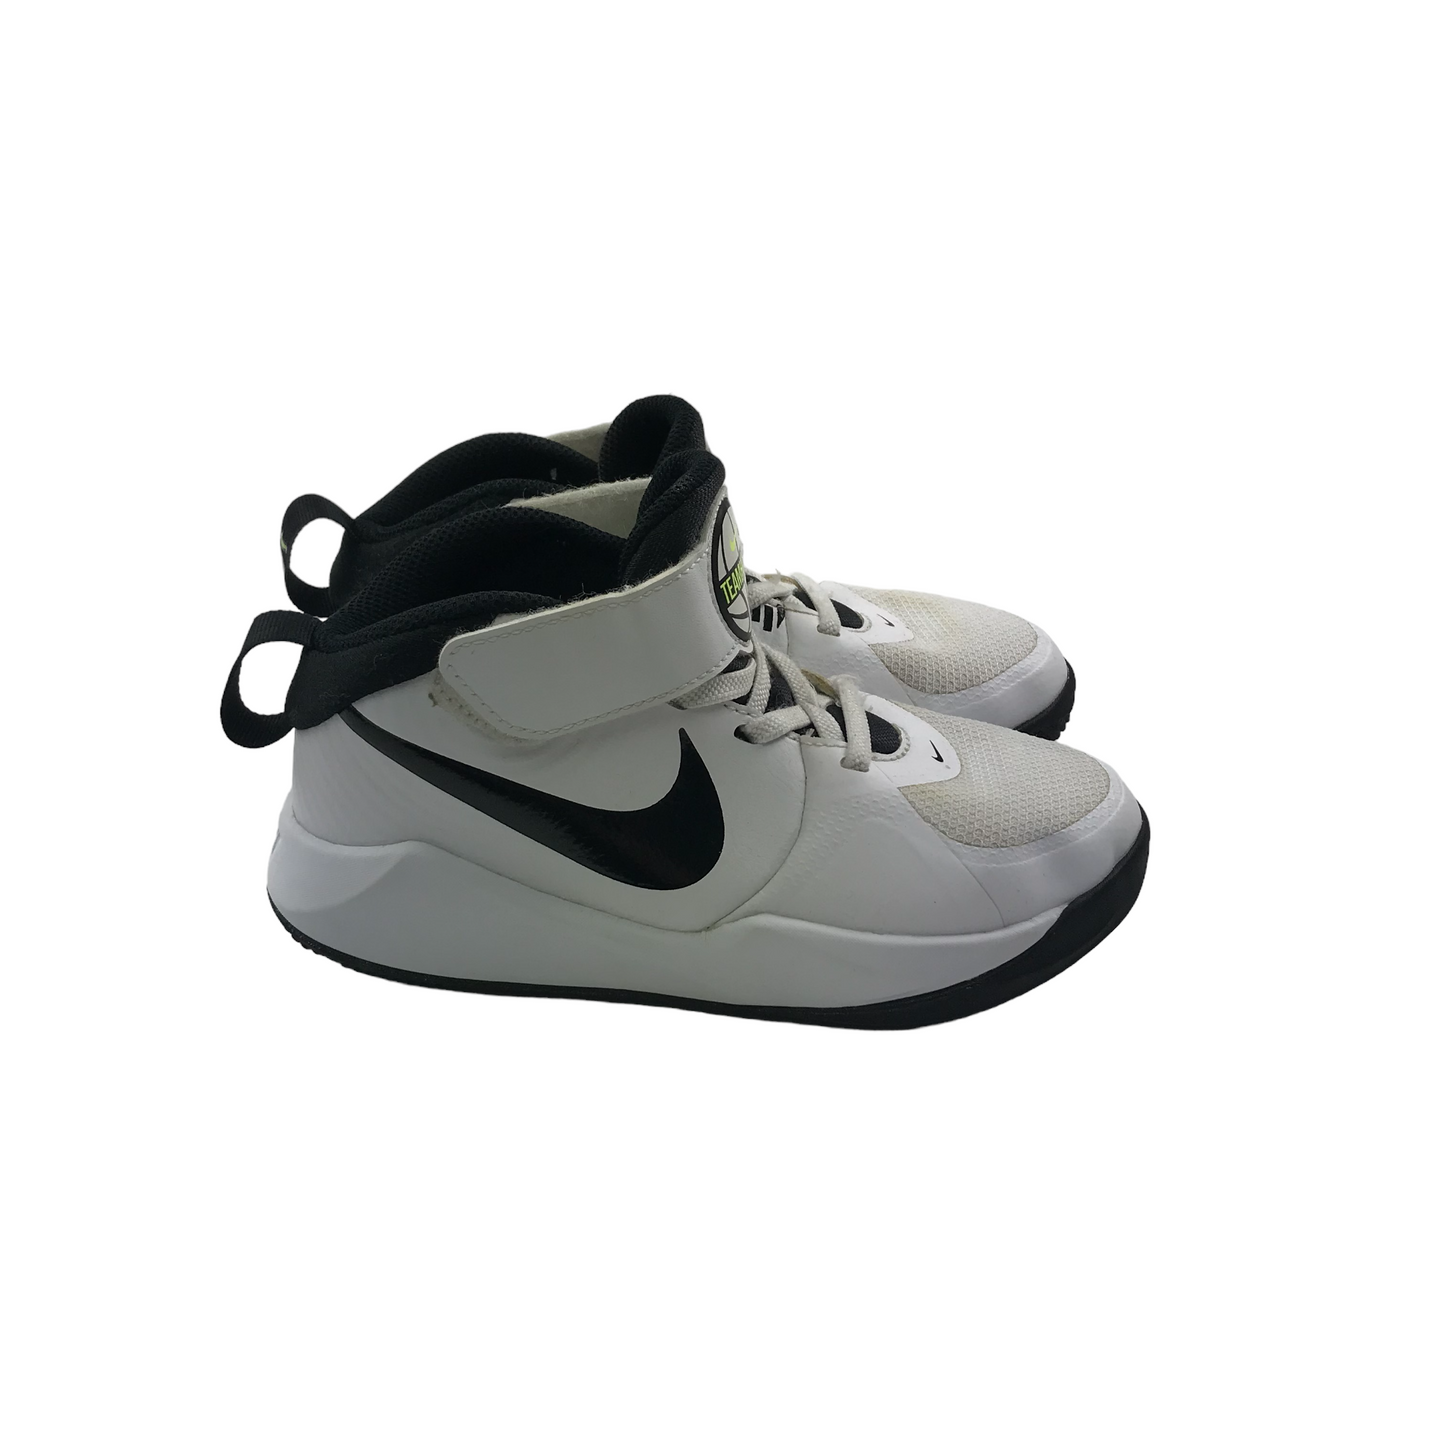 Nike Team Hustle D 9 White High Tops Trainers Shoe Size 12 junior